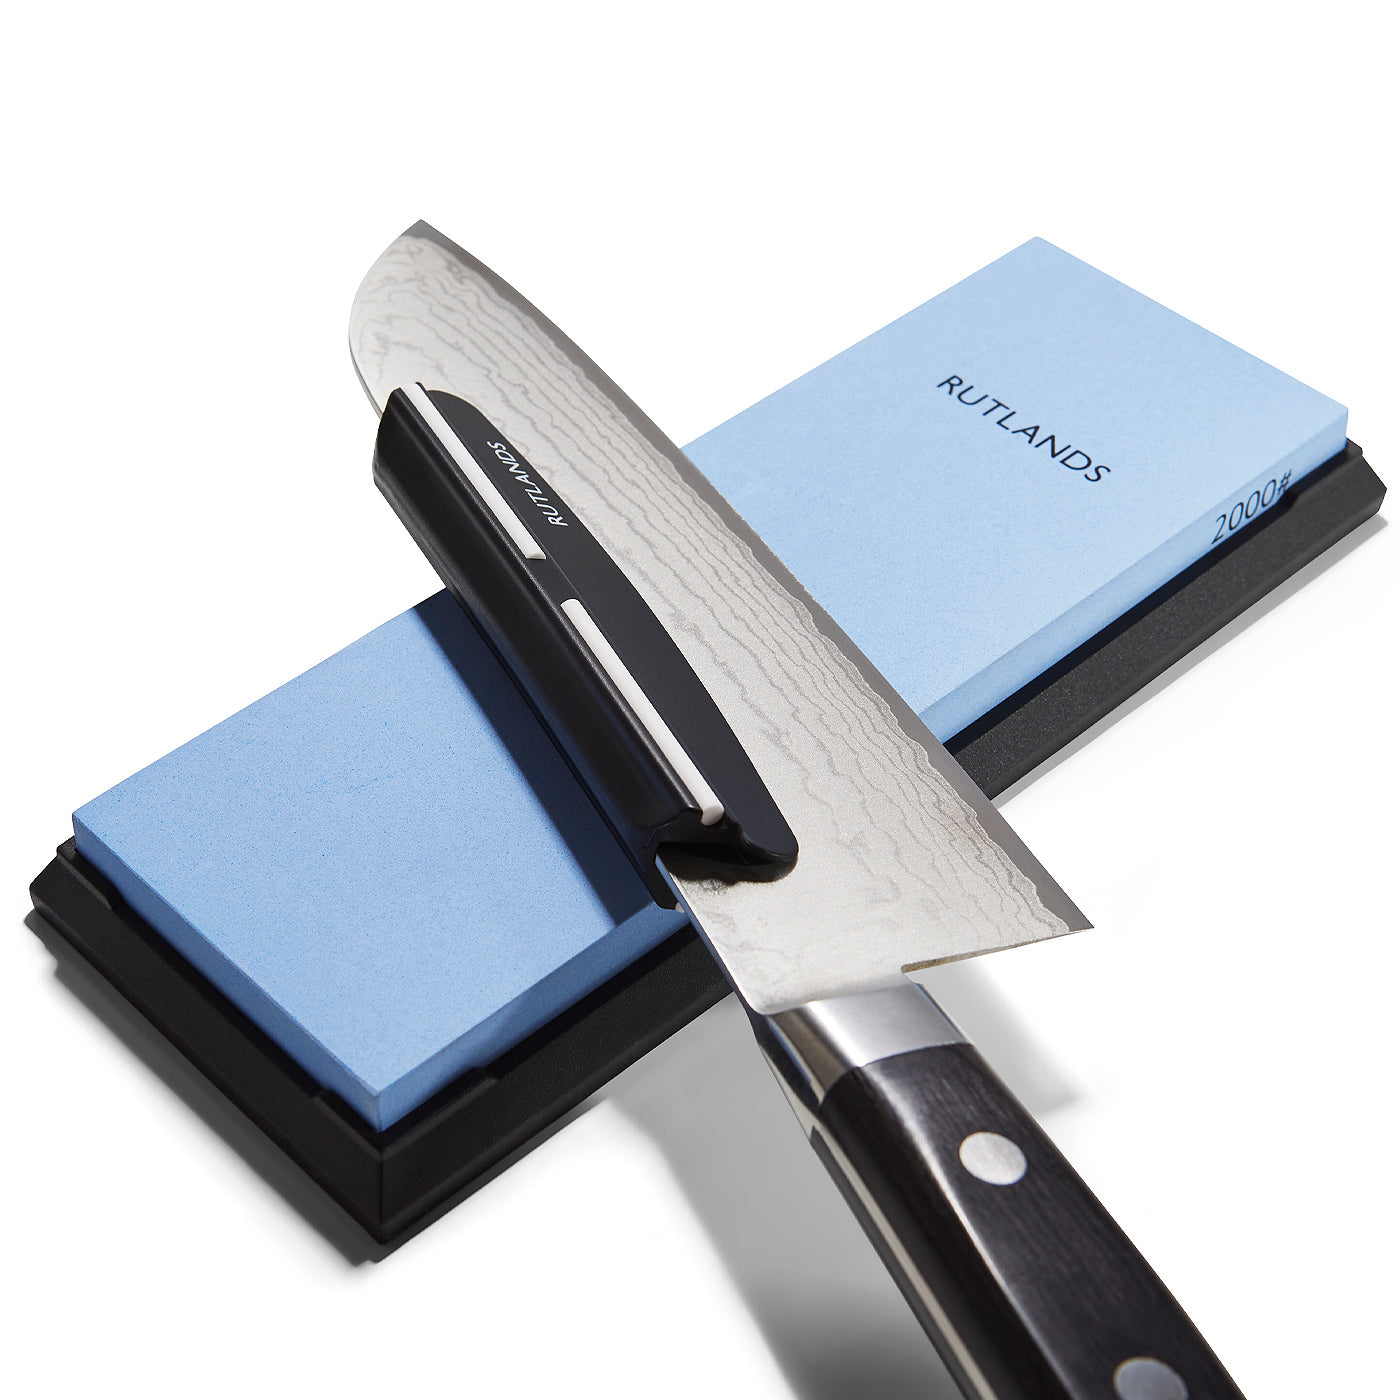 Rolling Knife Sharpener, Multi Angle Magnetic Comoros